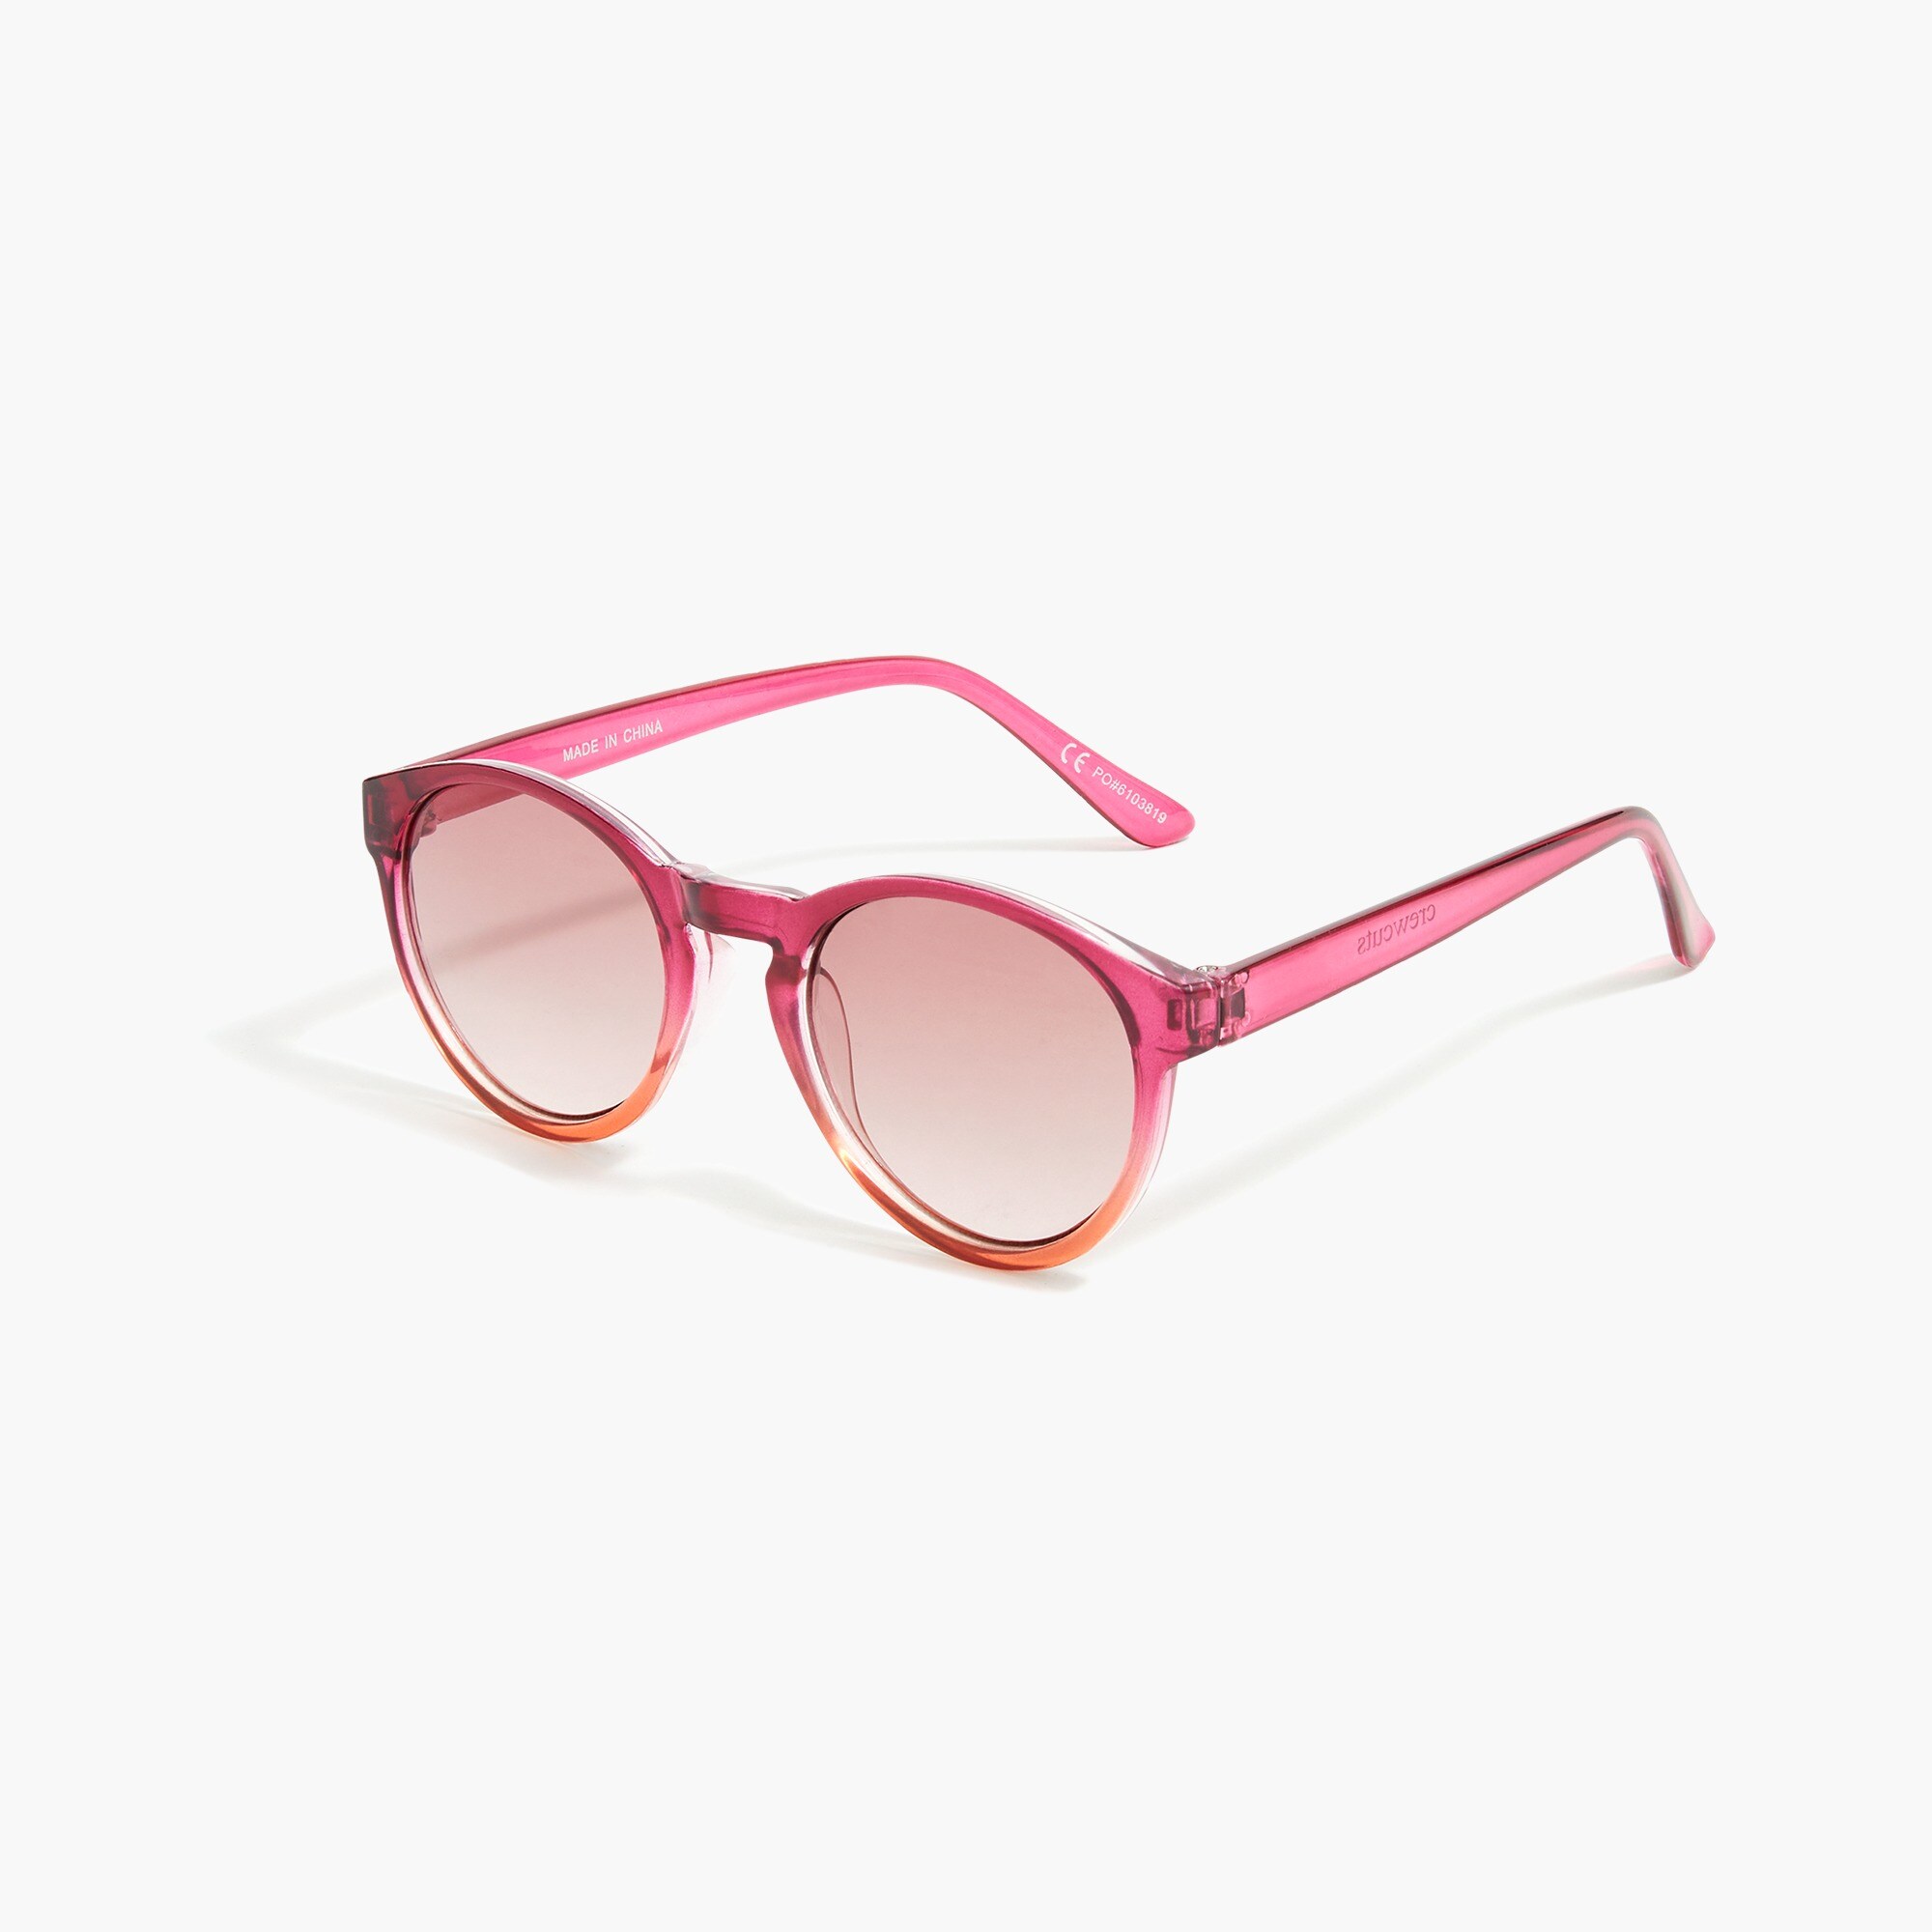  Girls&apos; round-frame sunglasses